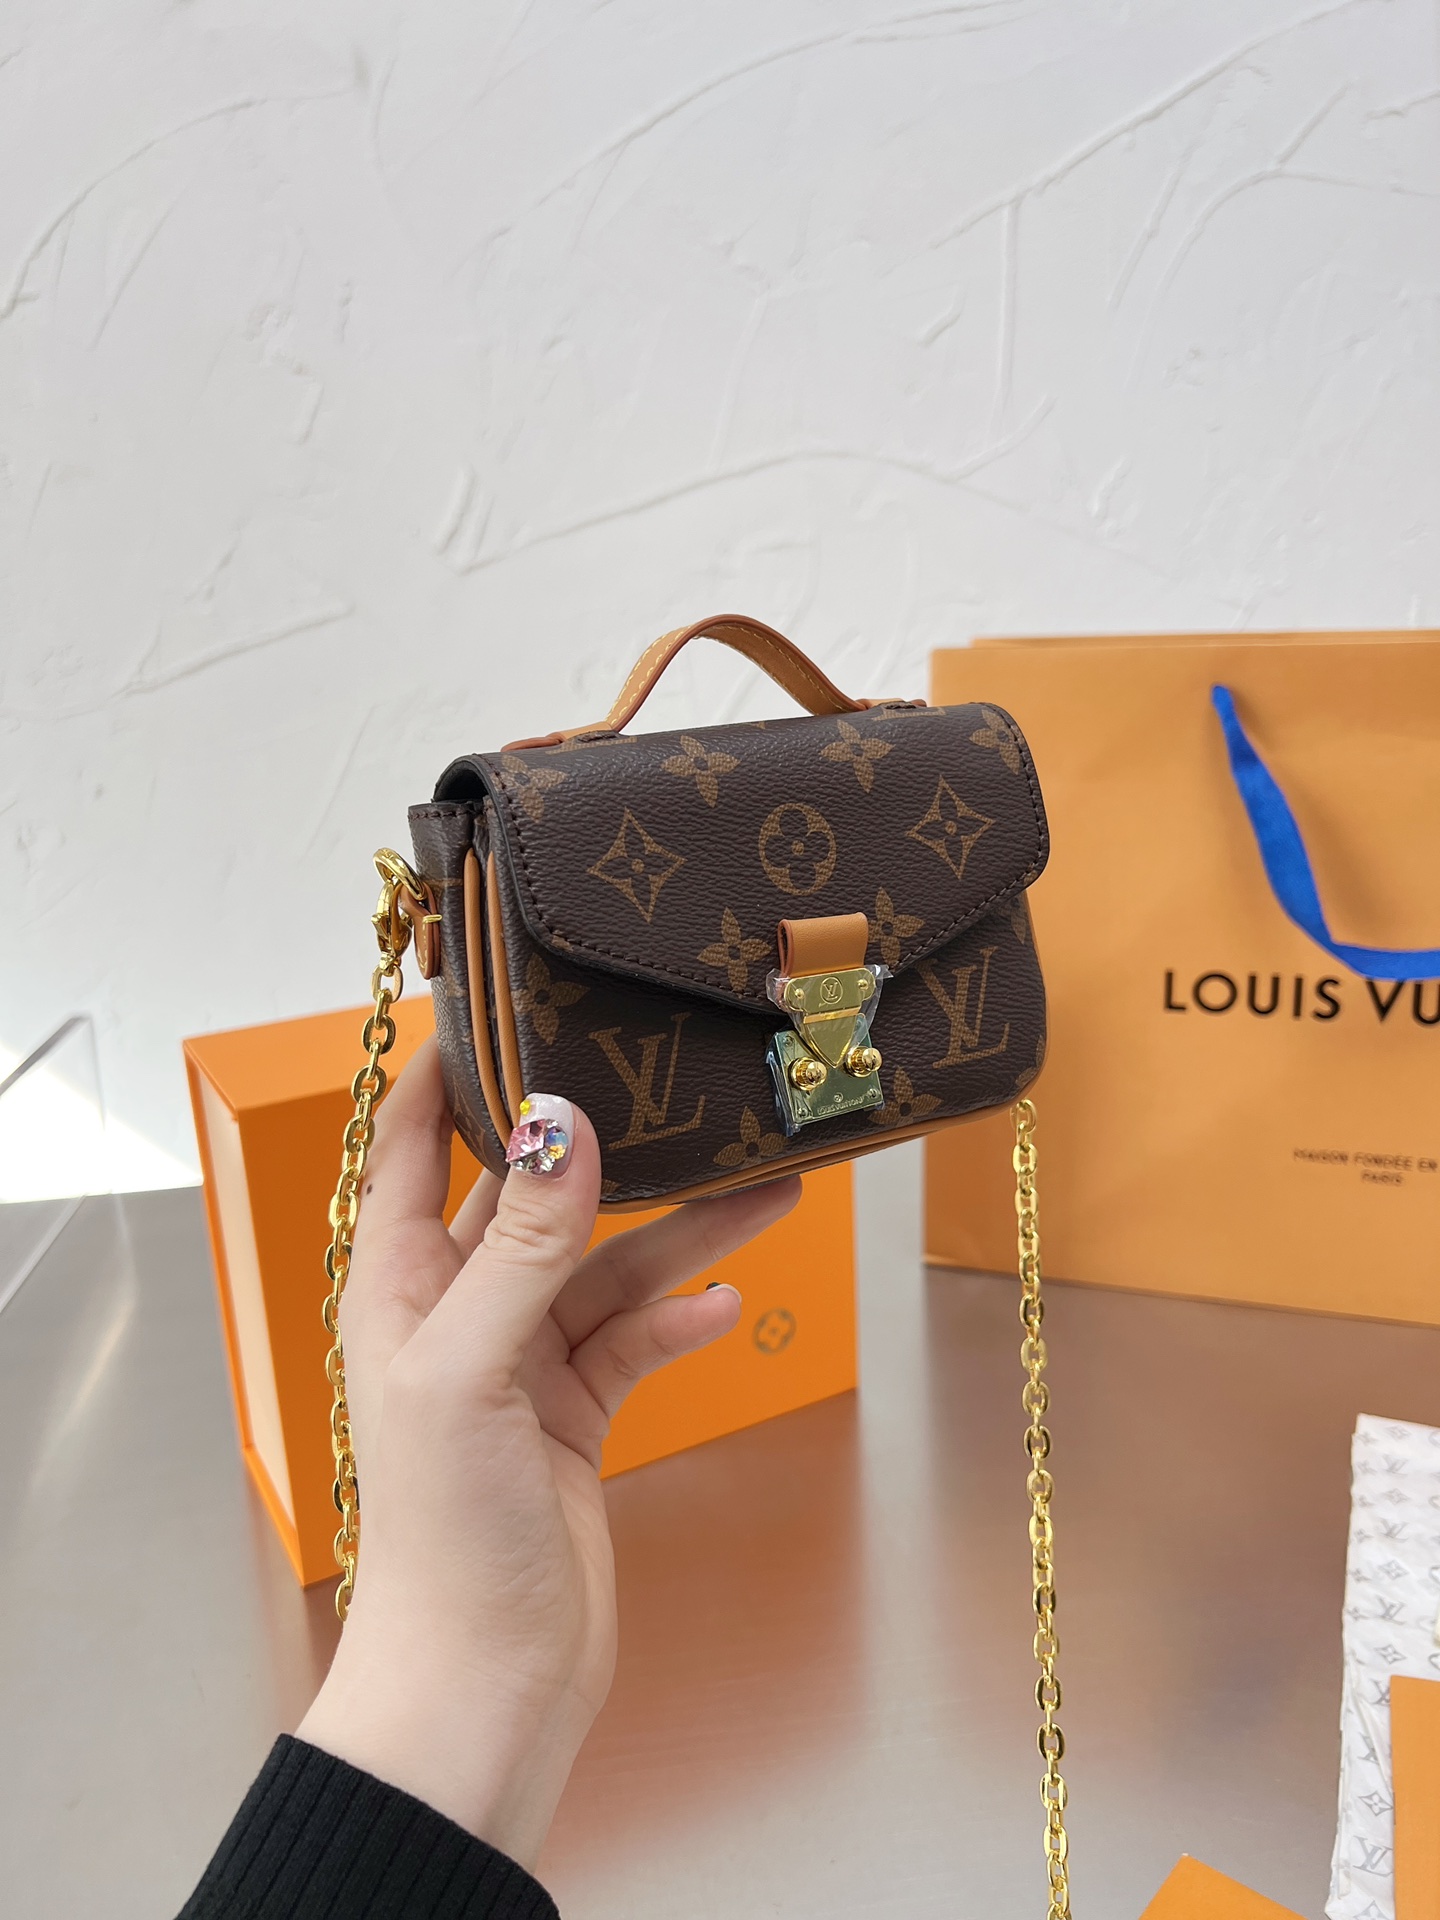 LV Louis Vuitton mini handbags